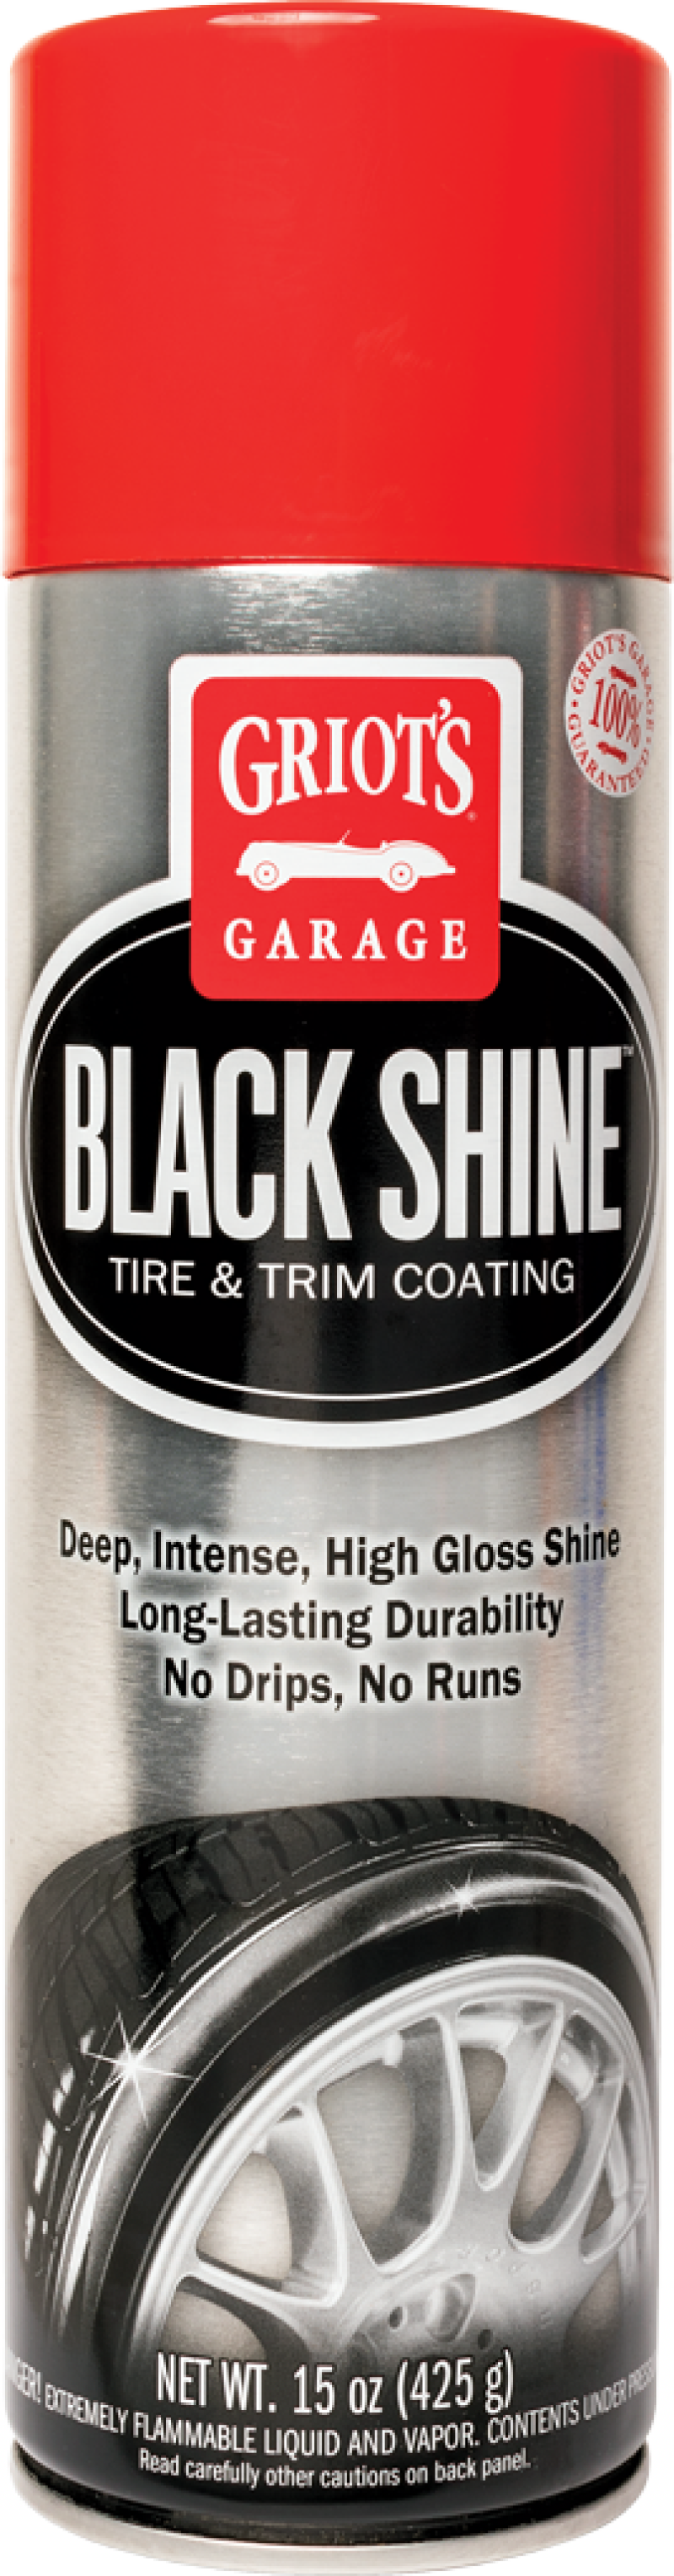 GRIOT'S GARAGE Black Shine Tire and Trim Coating - 15oz - Case of 12